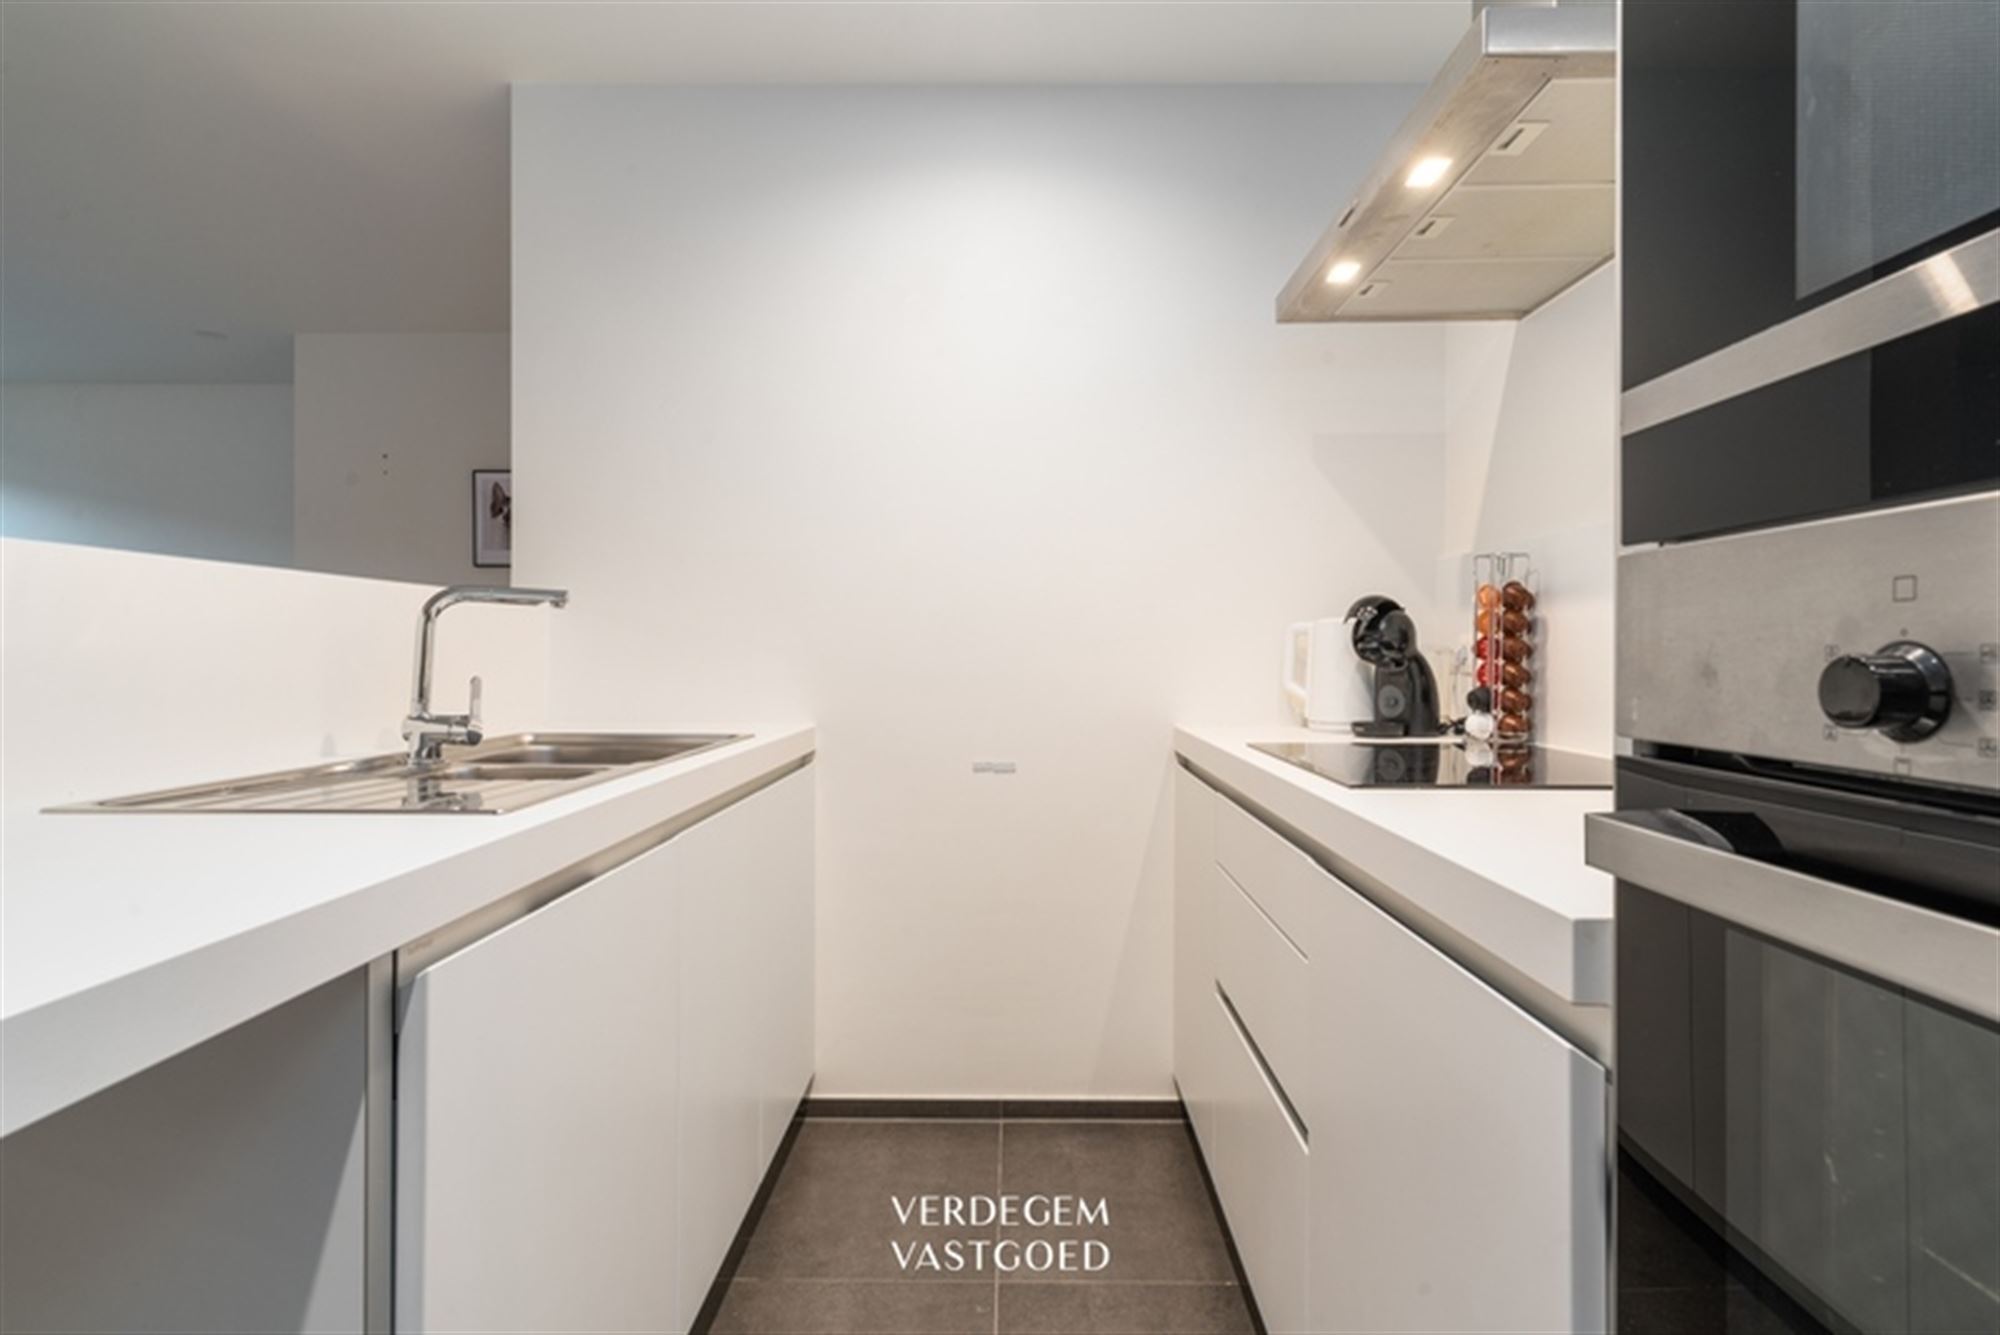 Comfort en kwaliteit: appartement met Bulthaup keuken en warmtepomp met geothermie foto 5